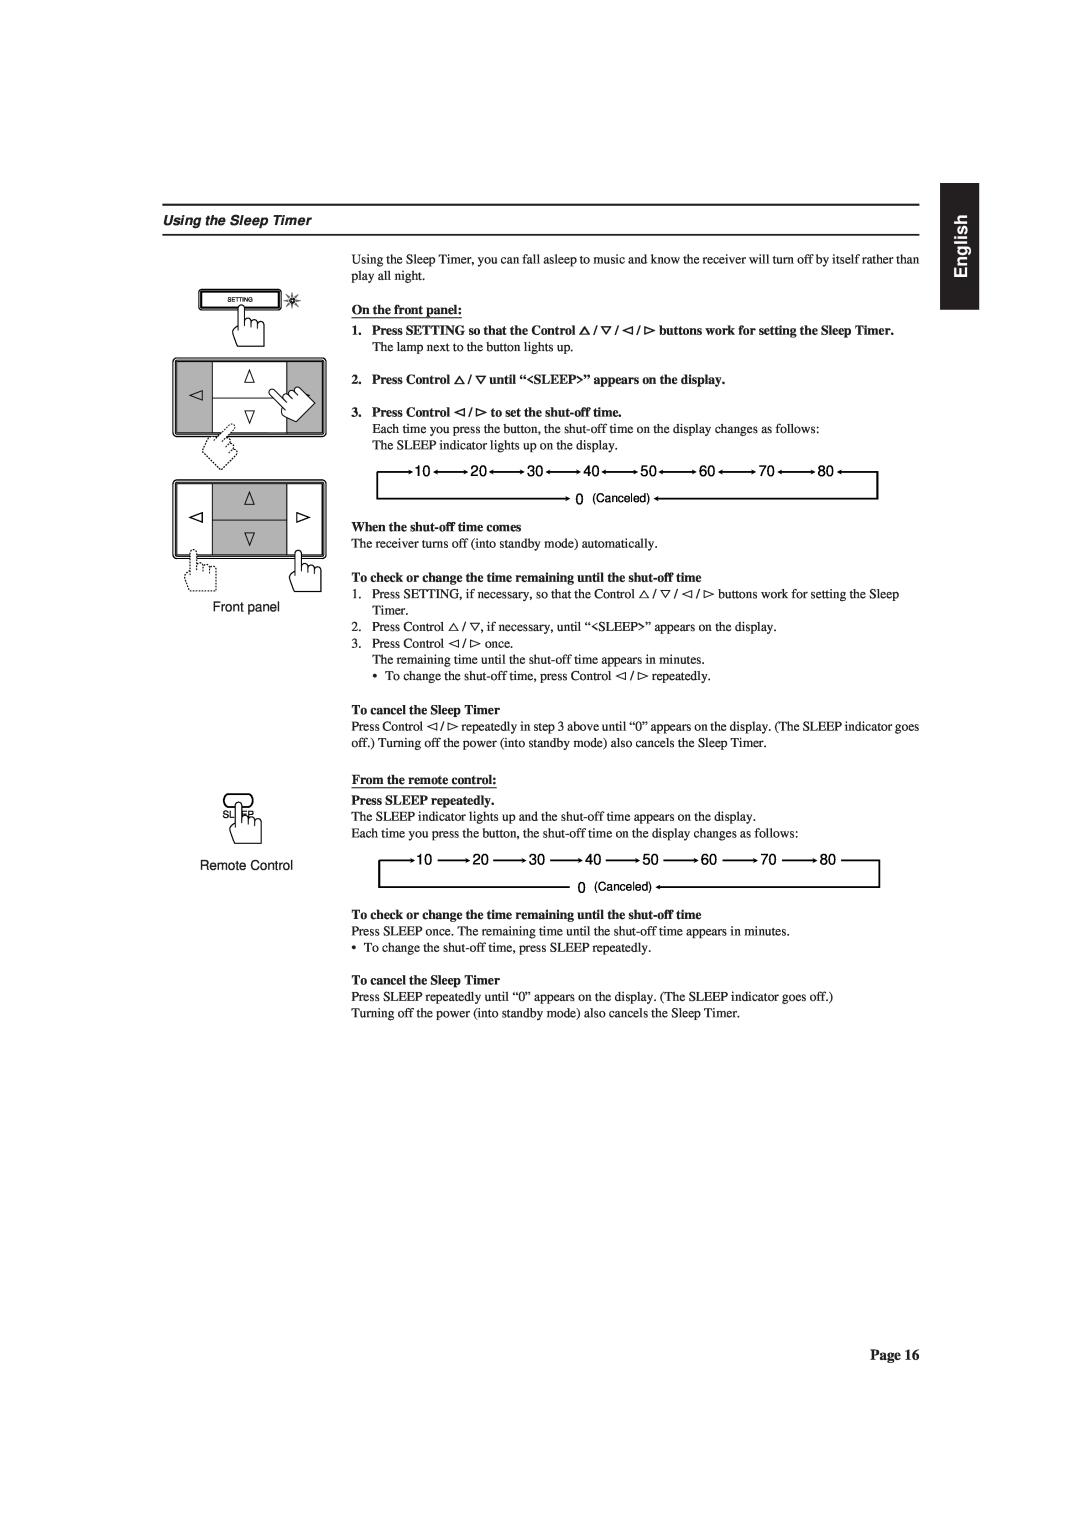 JVC RX-630RBK manual Using the Sleep Timer, 1020304050607080, English 